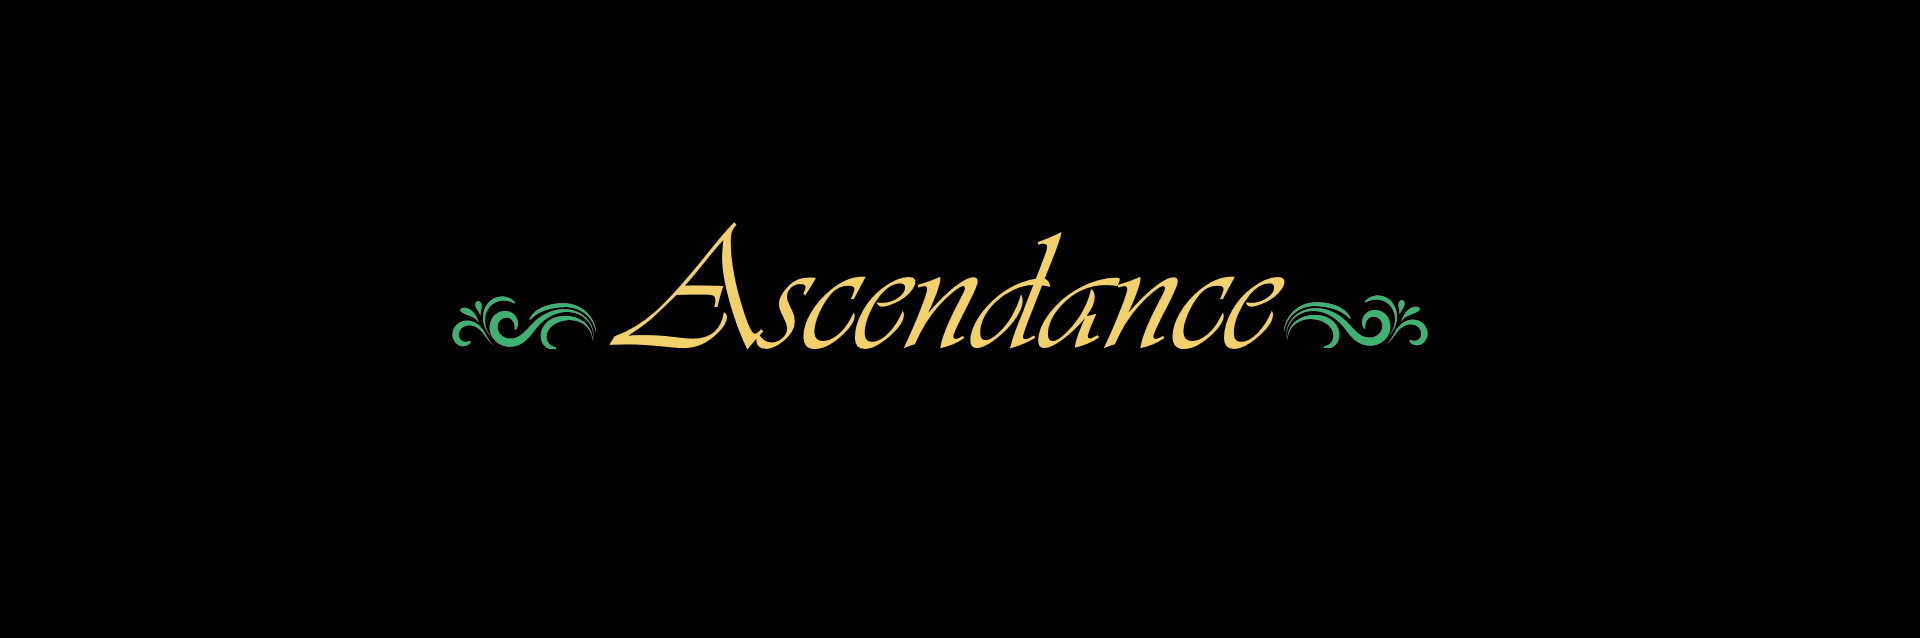 Ascendance